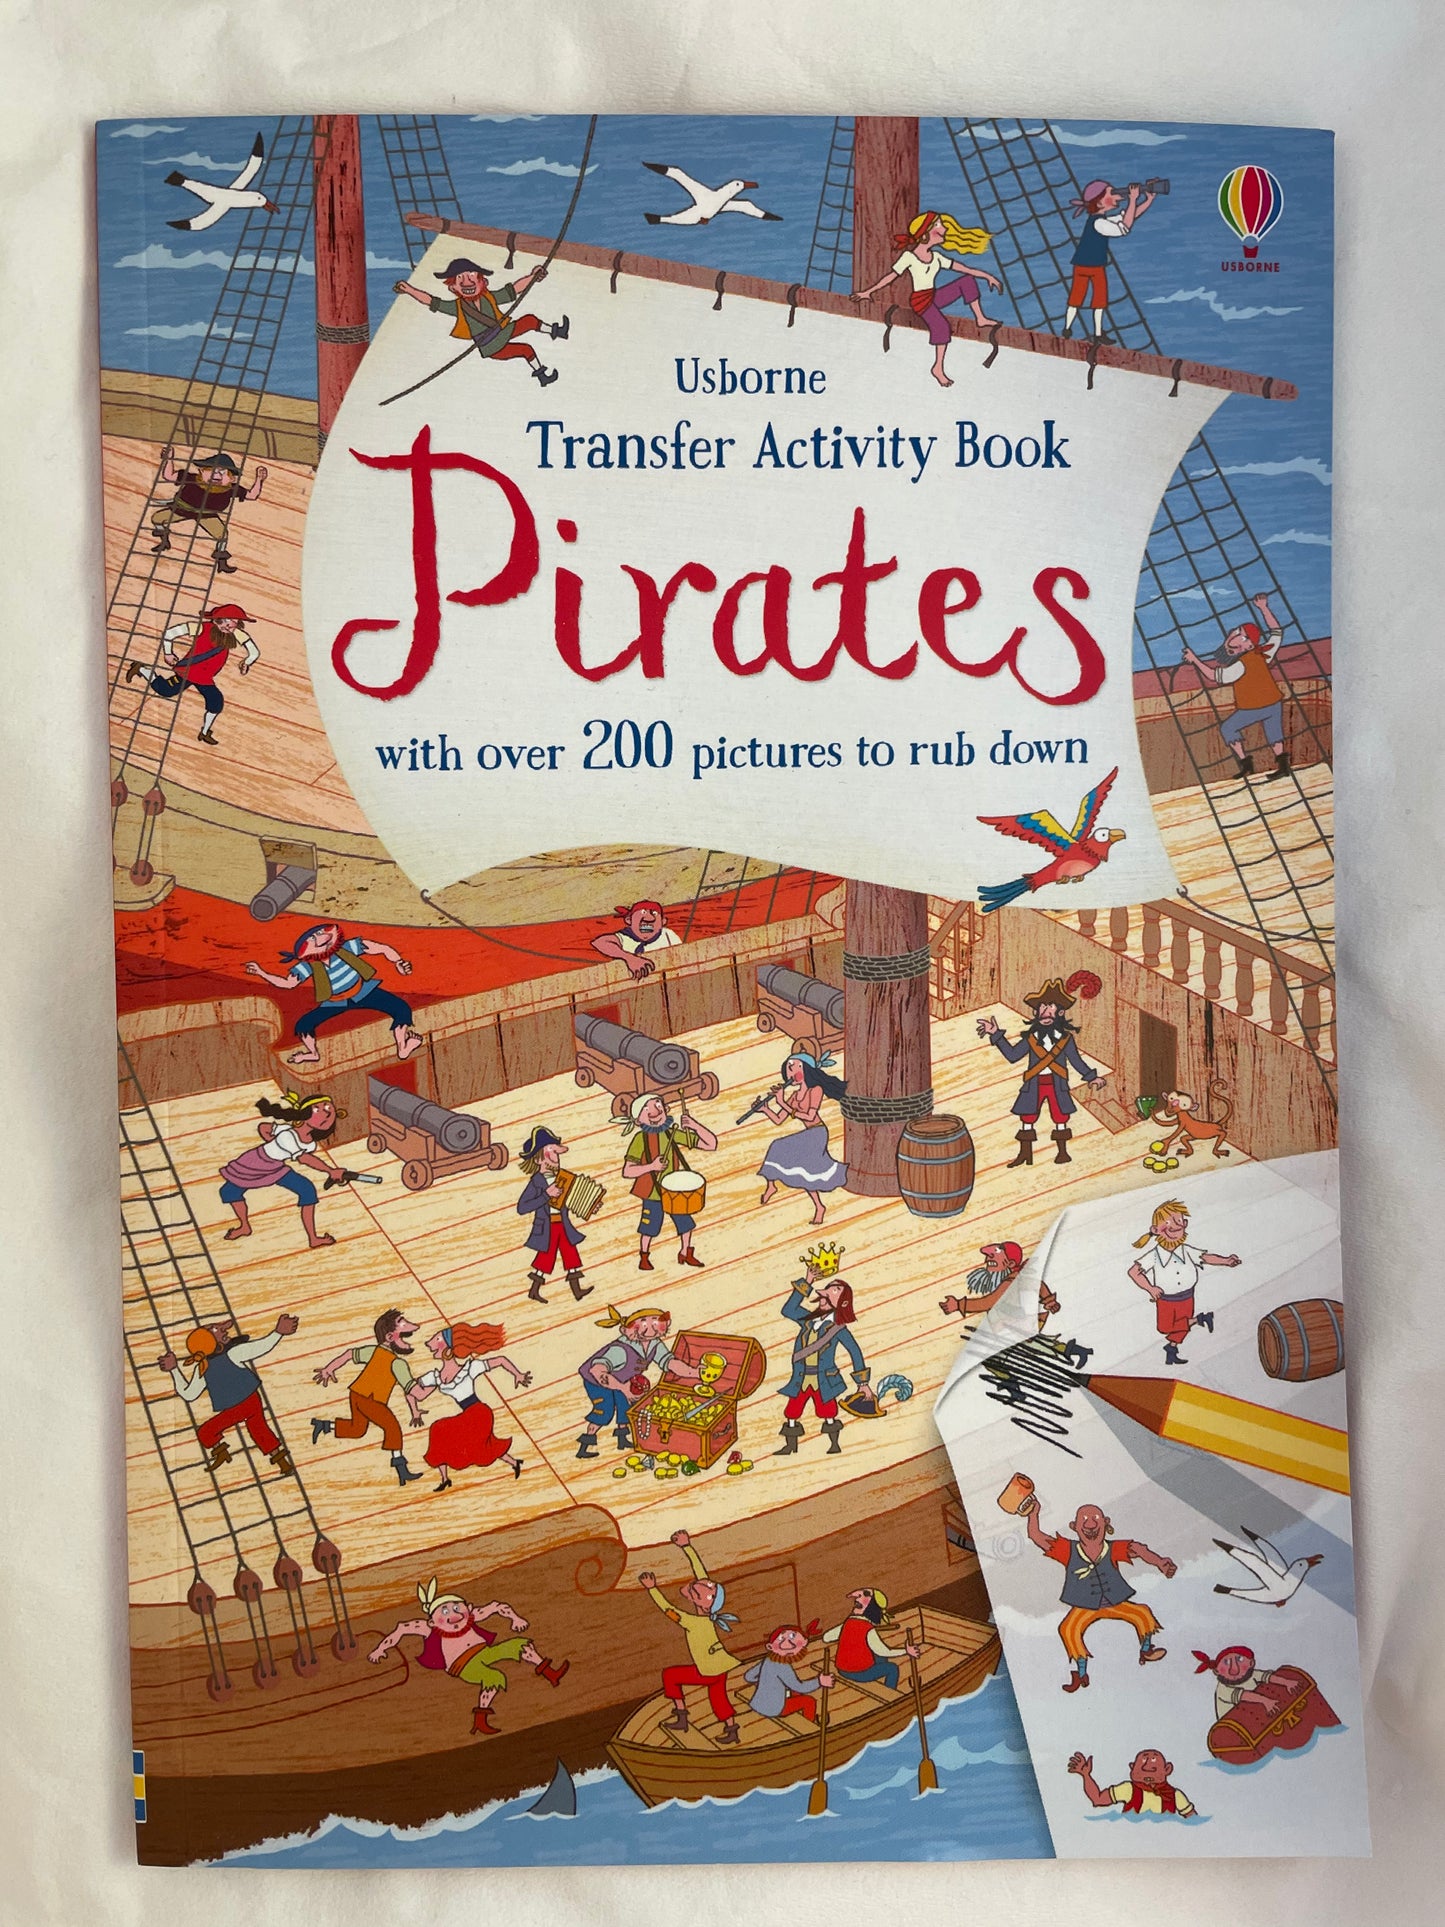 Usborne Transfer Activity Book: Pirates